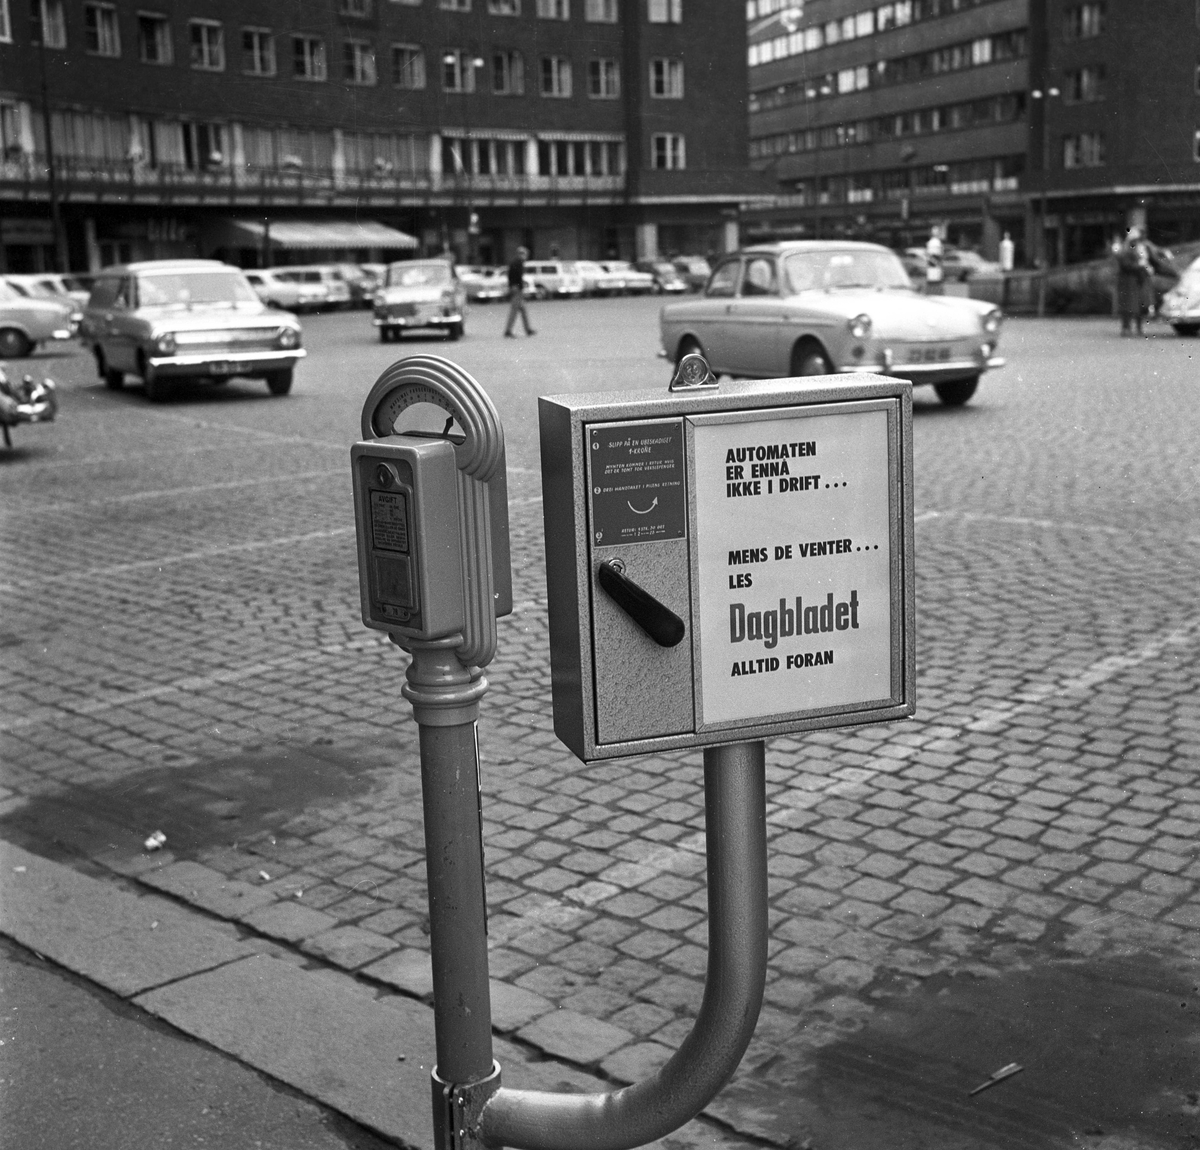 Reklameskilt Dagbladet.
Fotografert 1965.